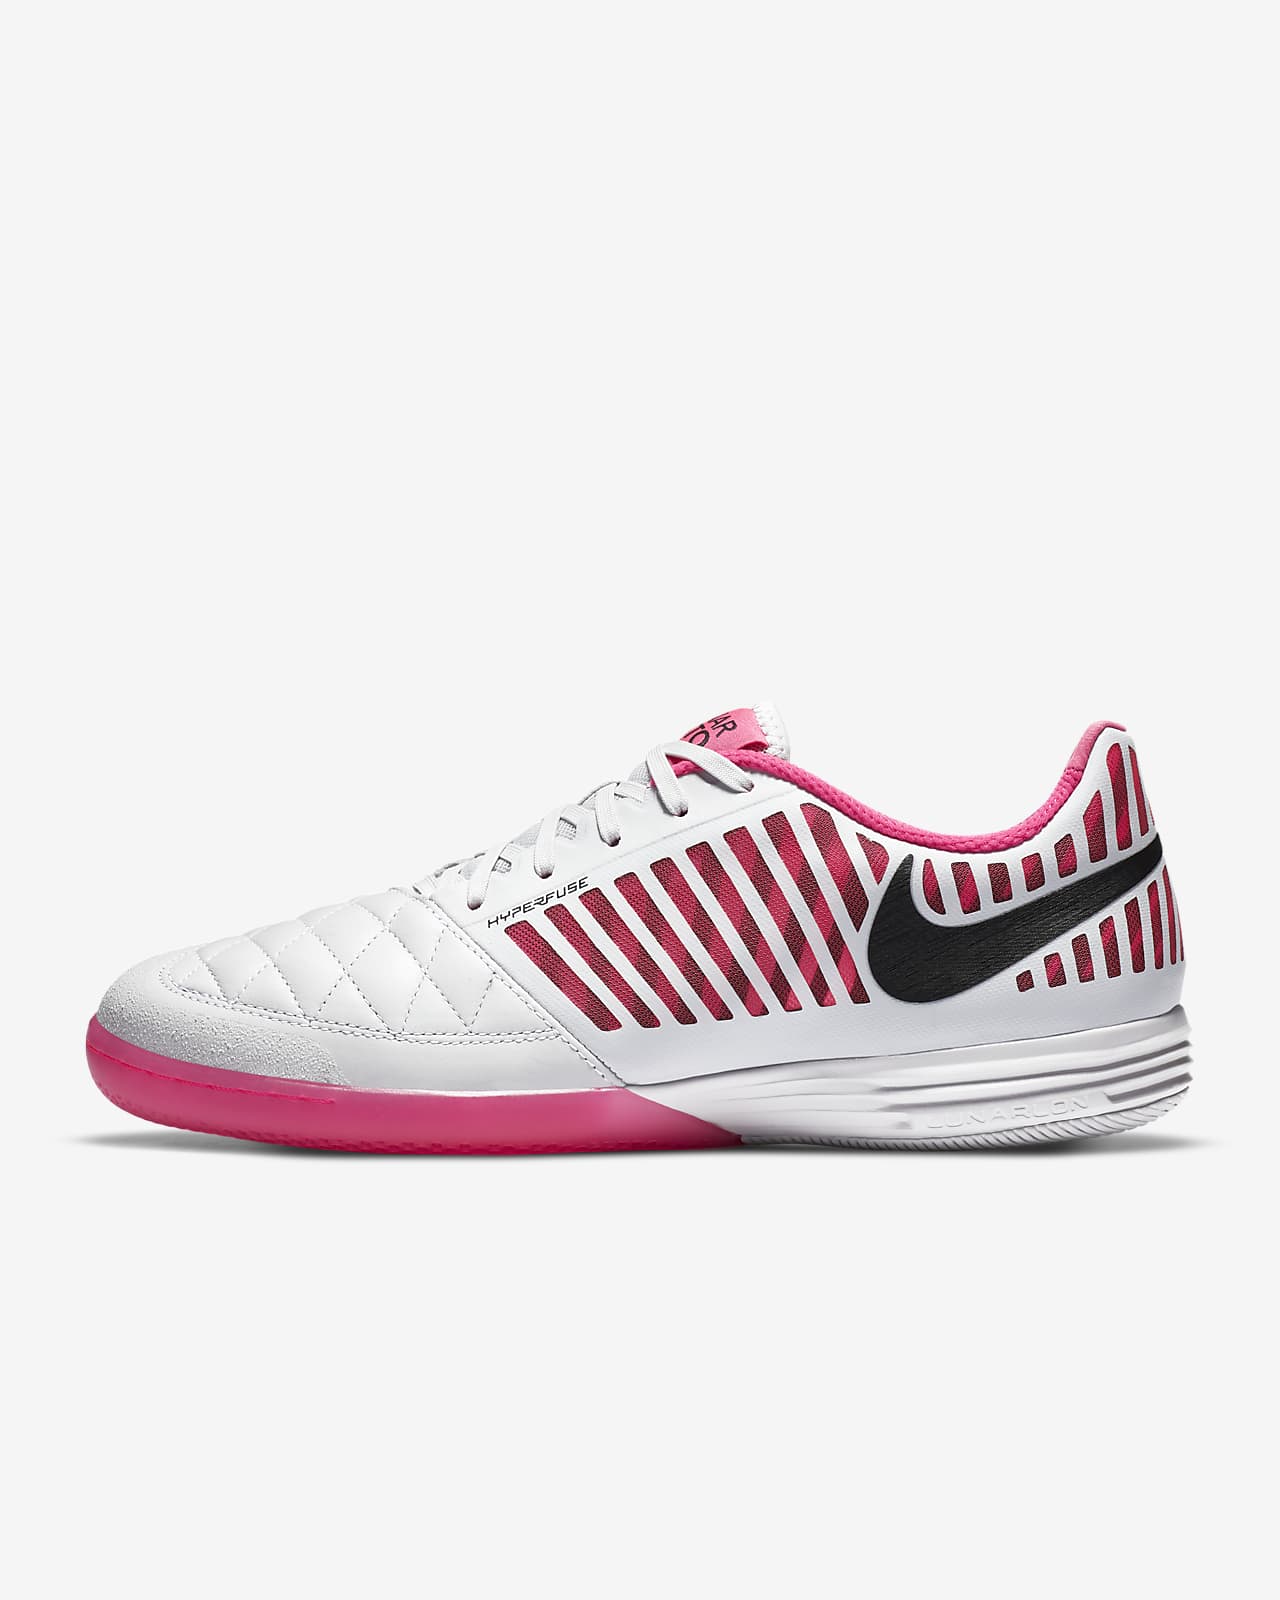 Nike Lunar Gato II IC Indoor Court Football Shoe. Nike AE